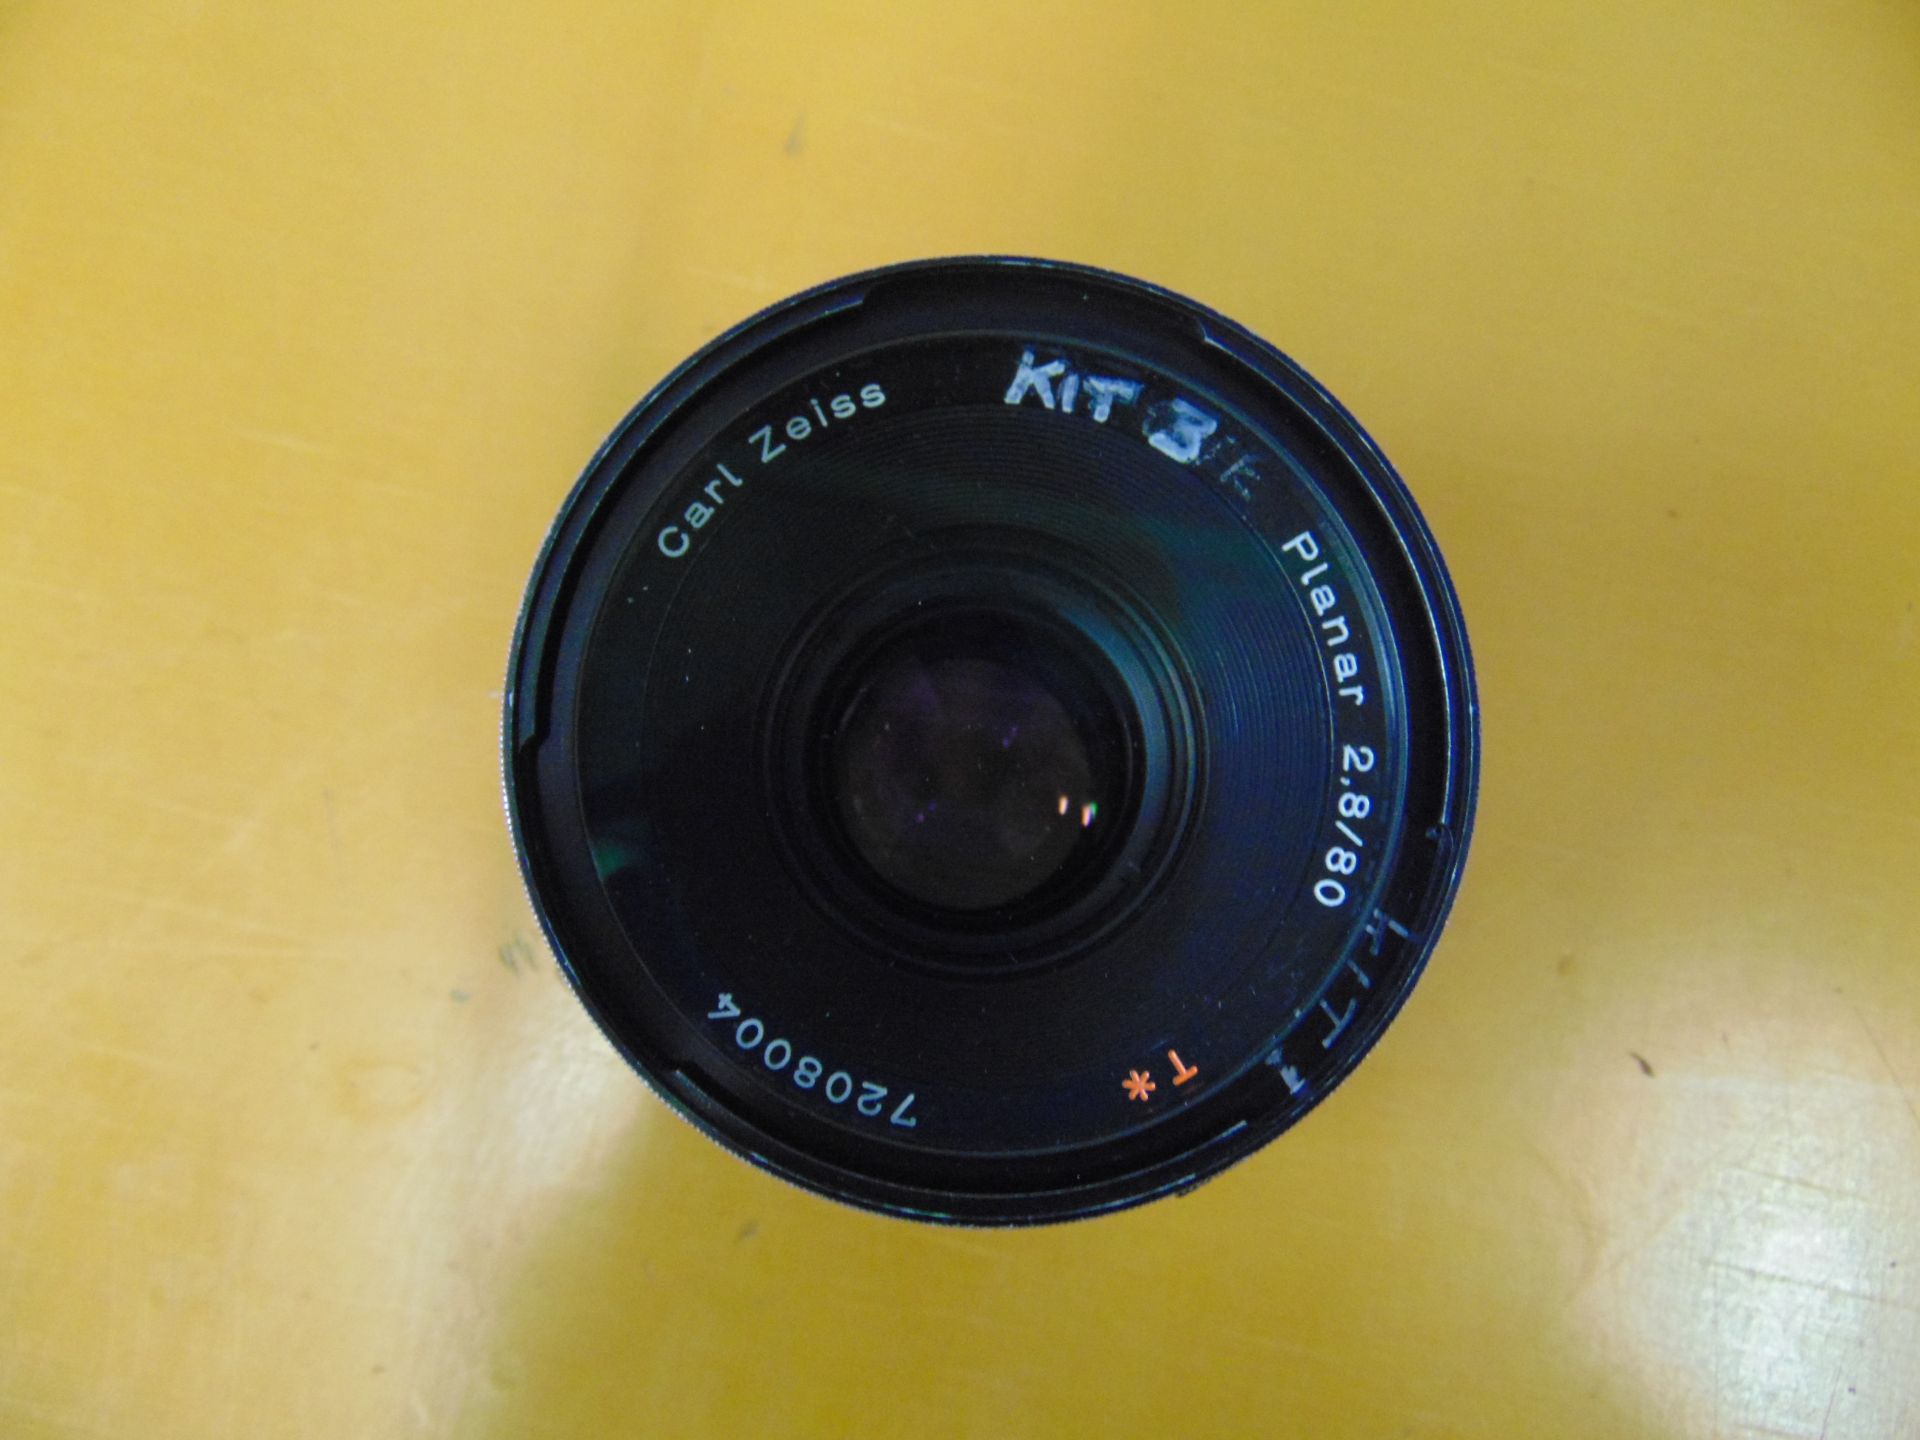 Carl Zeiss 7515250 Planar T* 2.8/80 Lense